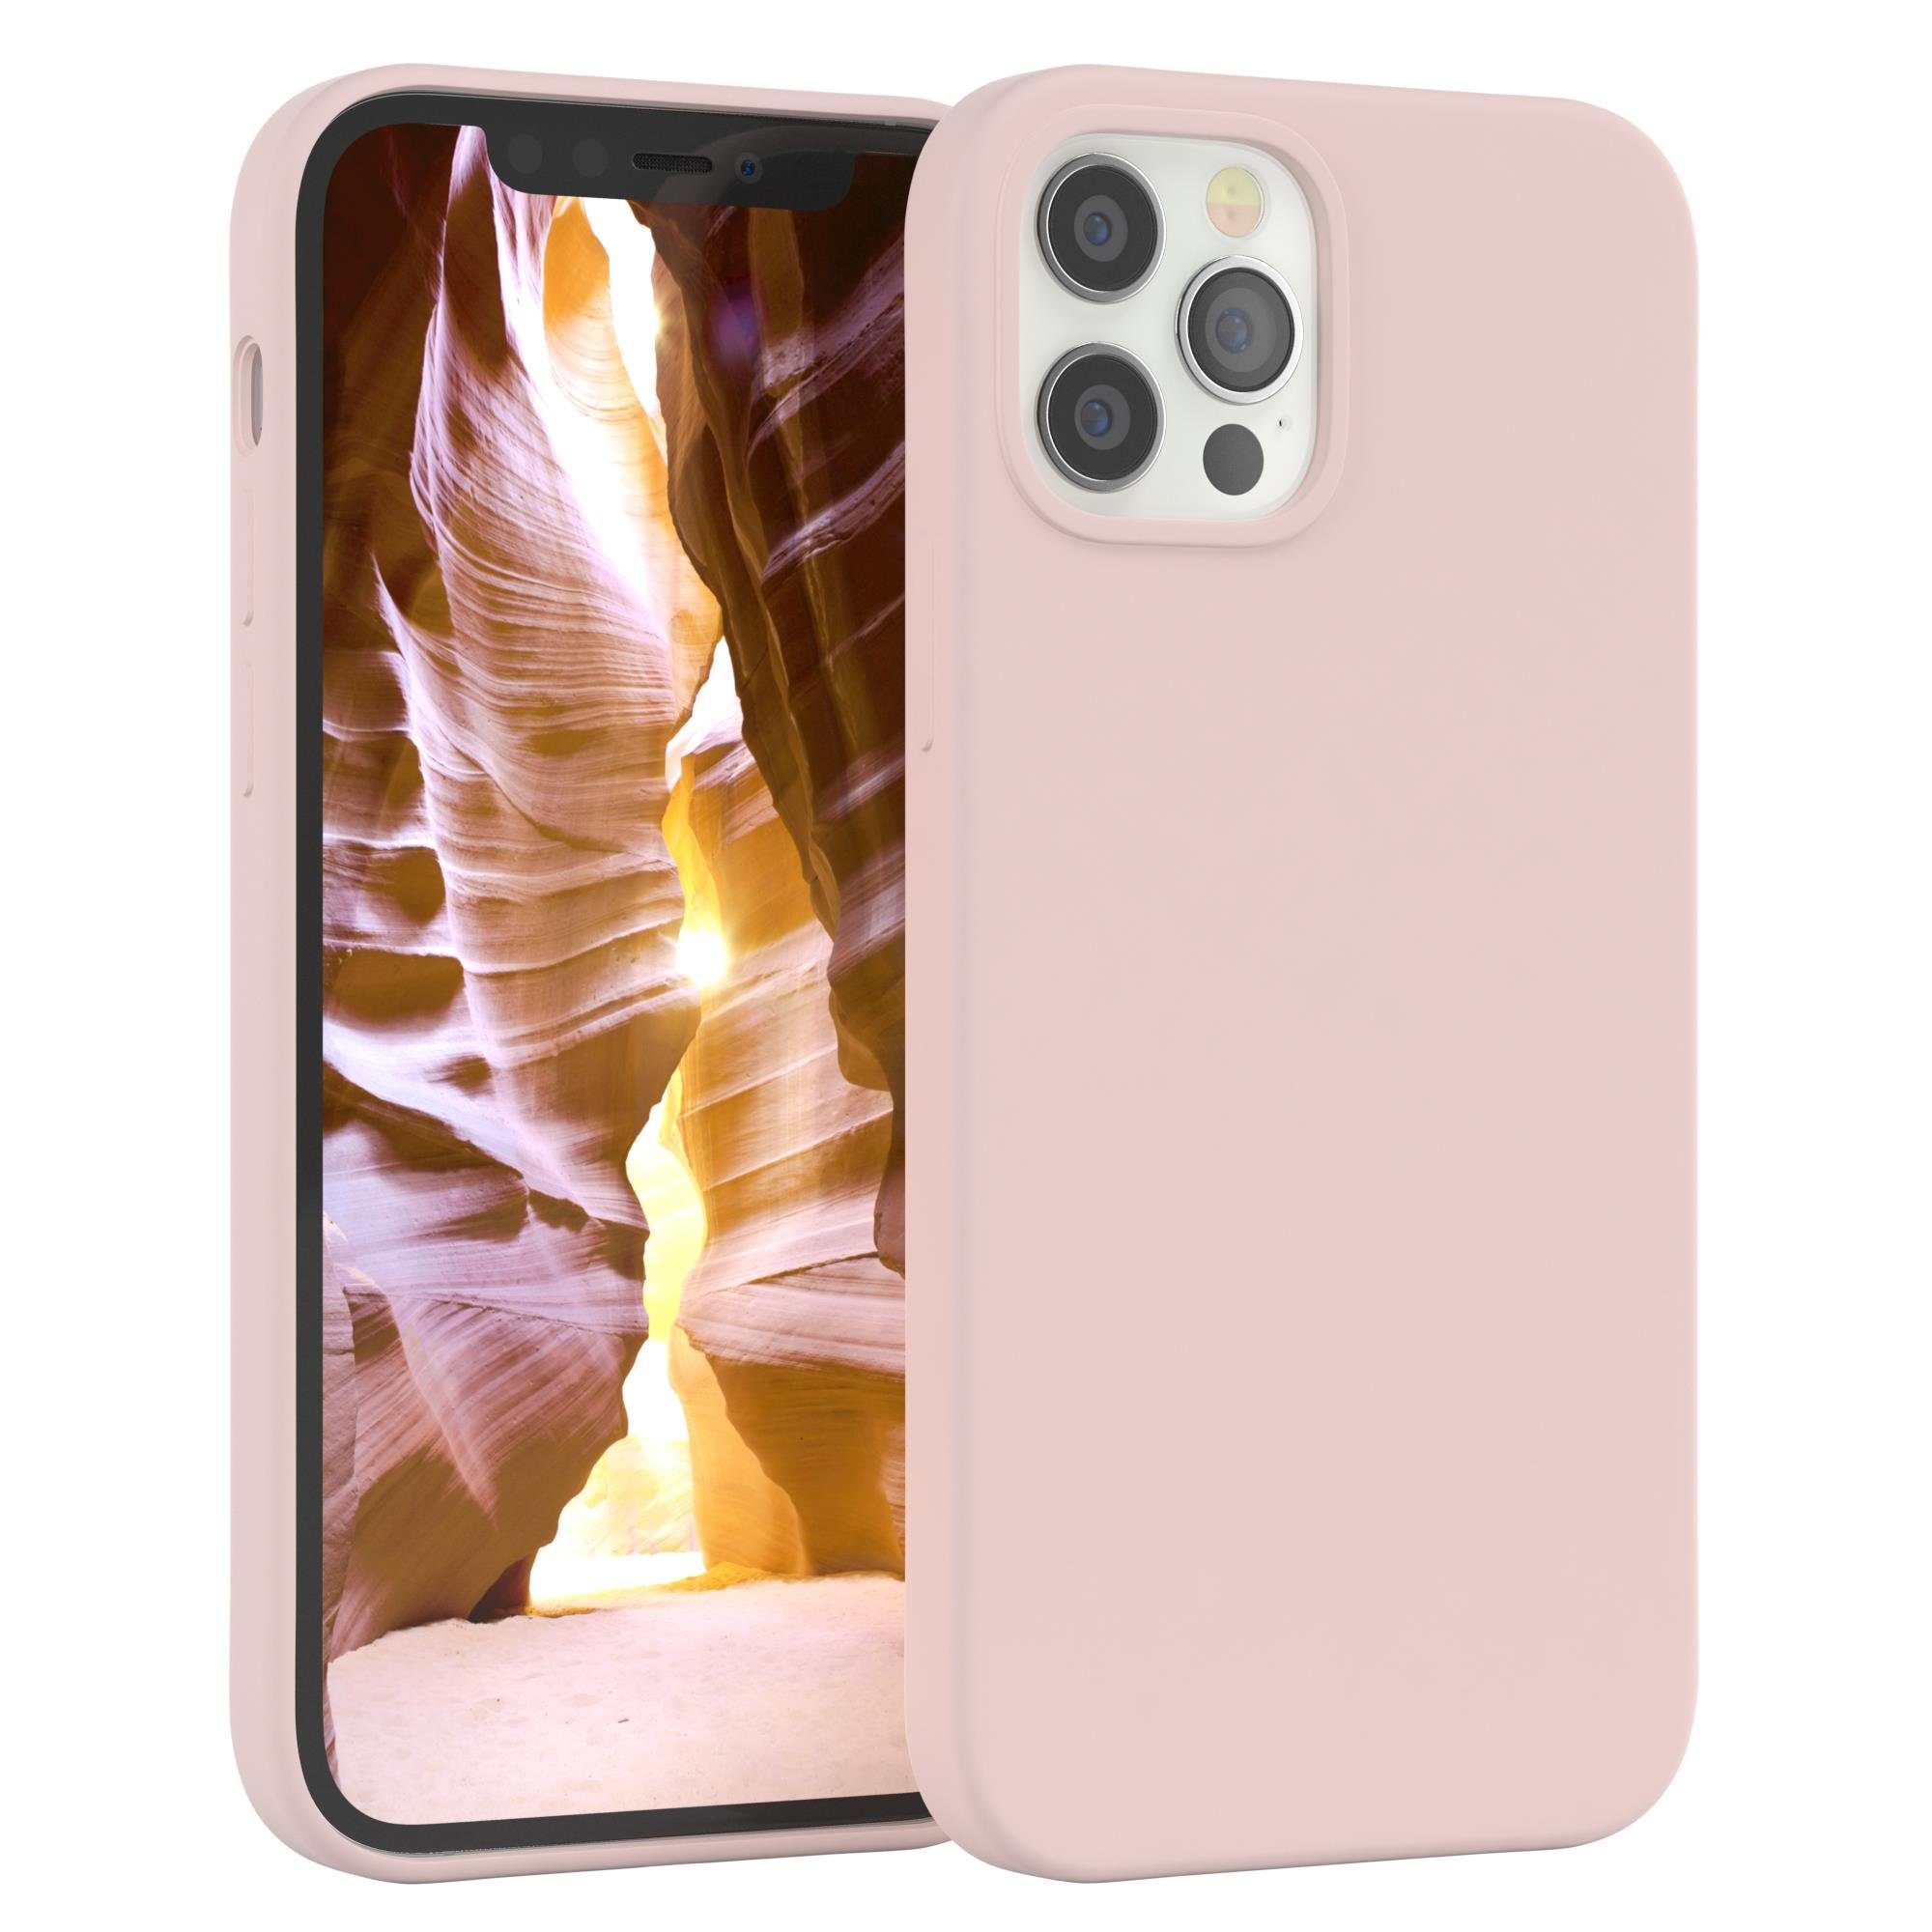 EAZY CASE Handyhülle Premium Silikon Case für iPhone 12 / iPhone 12 Pro 6,1 Zoll, Silikon Schutzhülle mit Kameraschutz kratzfest Cover Rosa / Altrosa